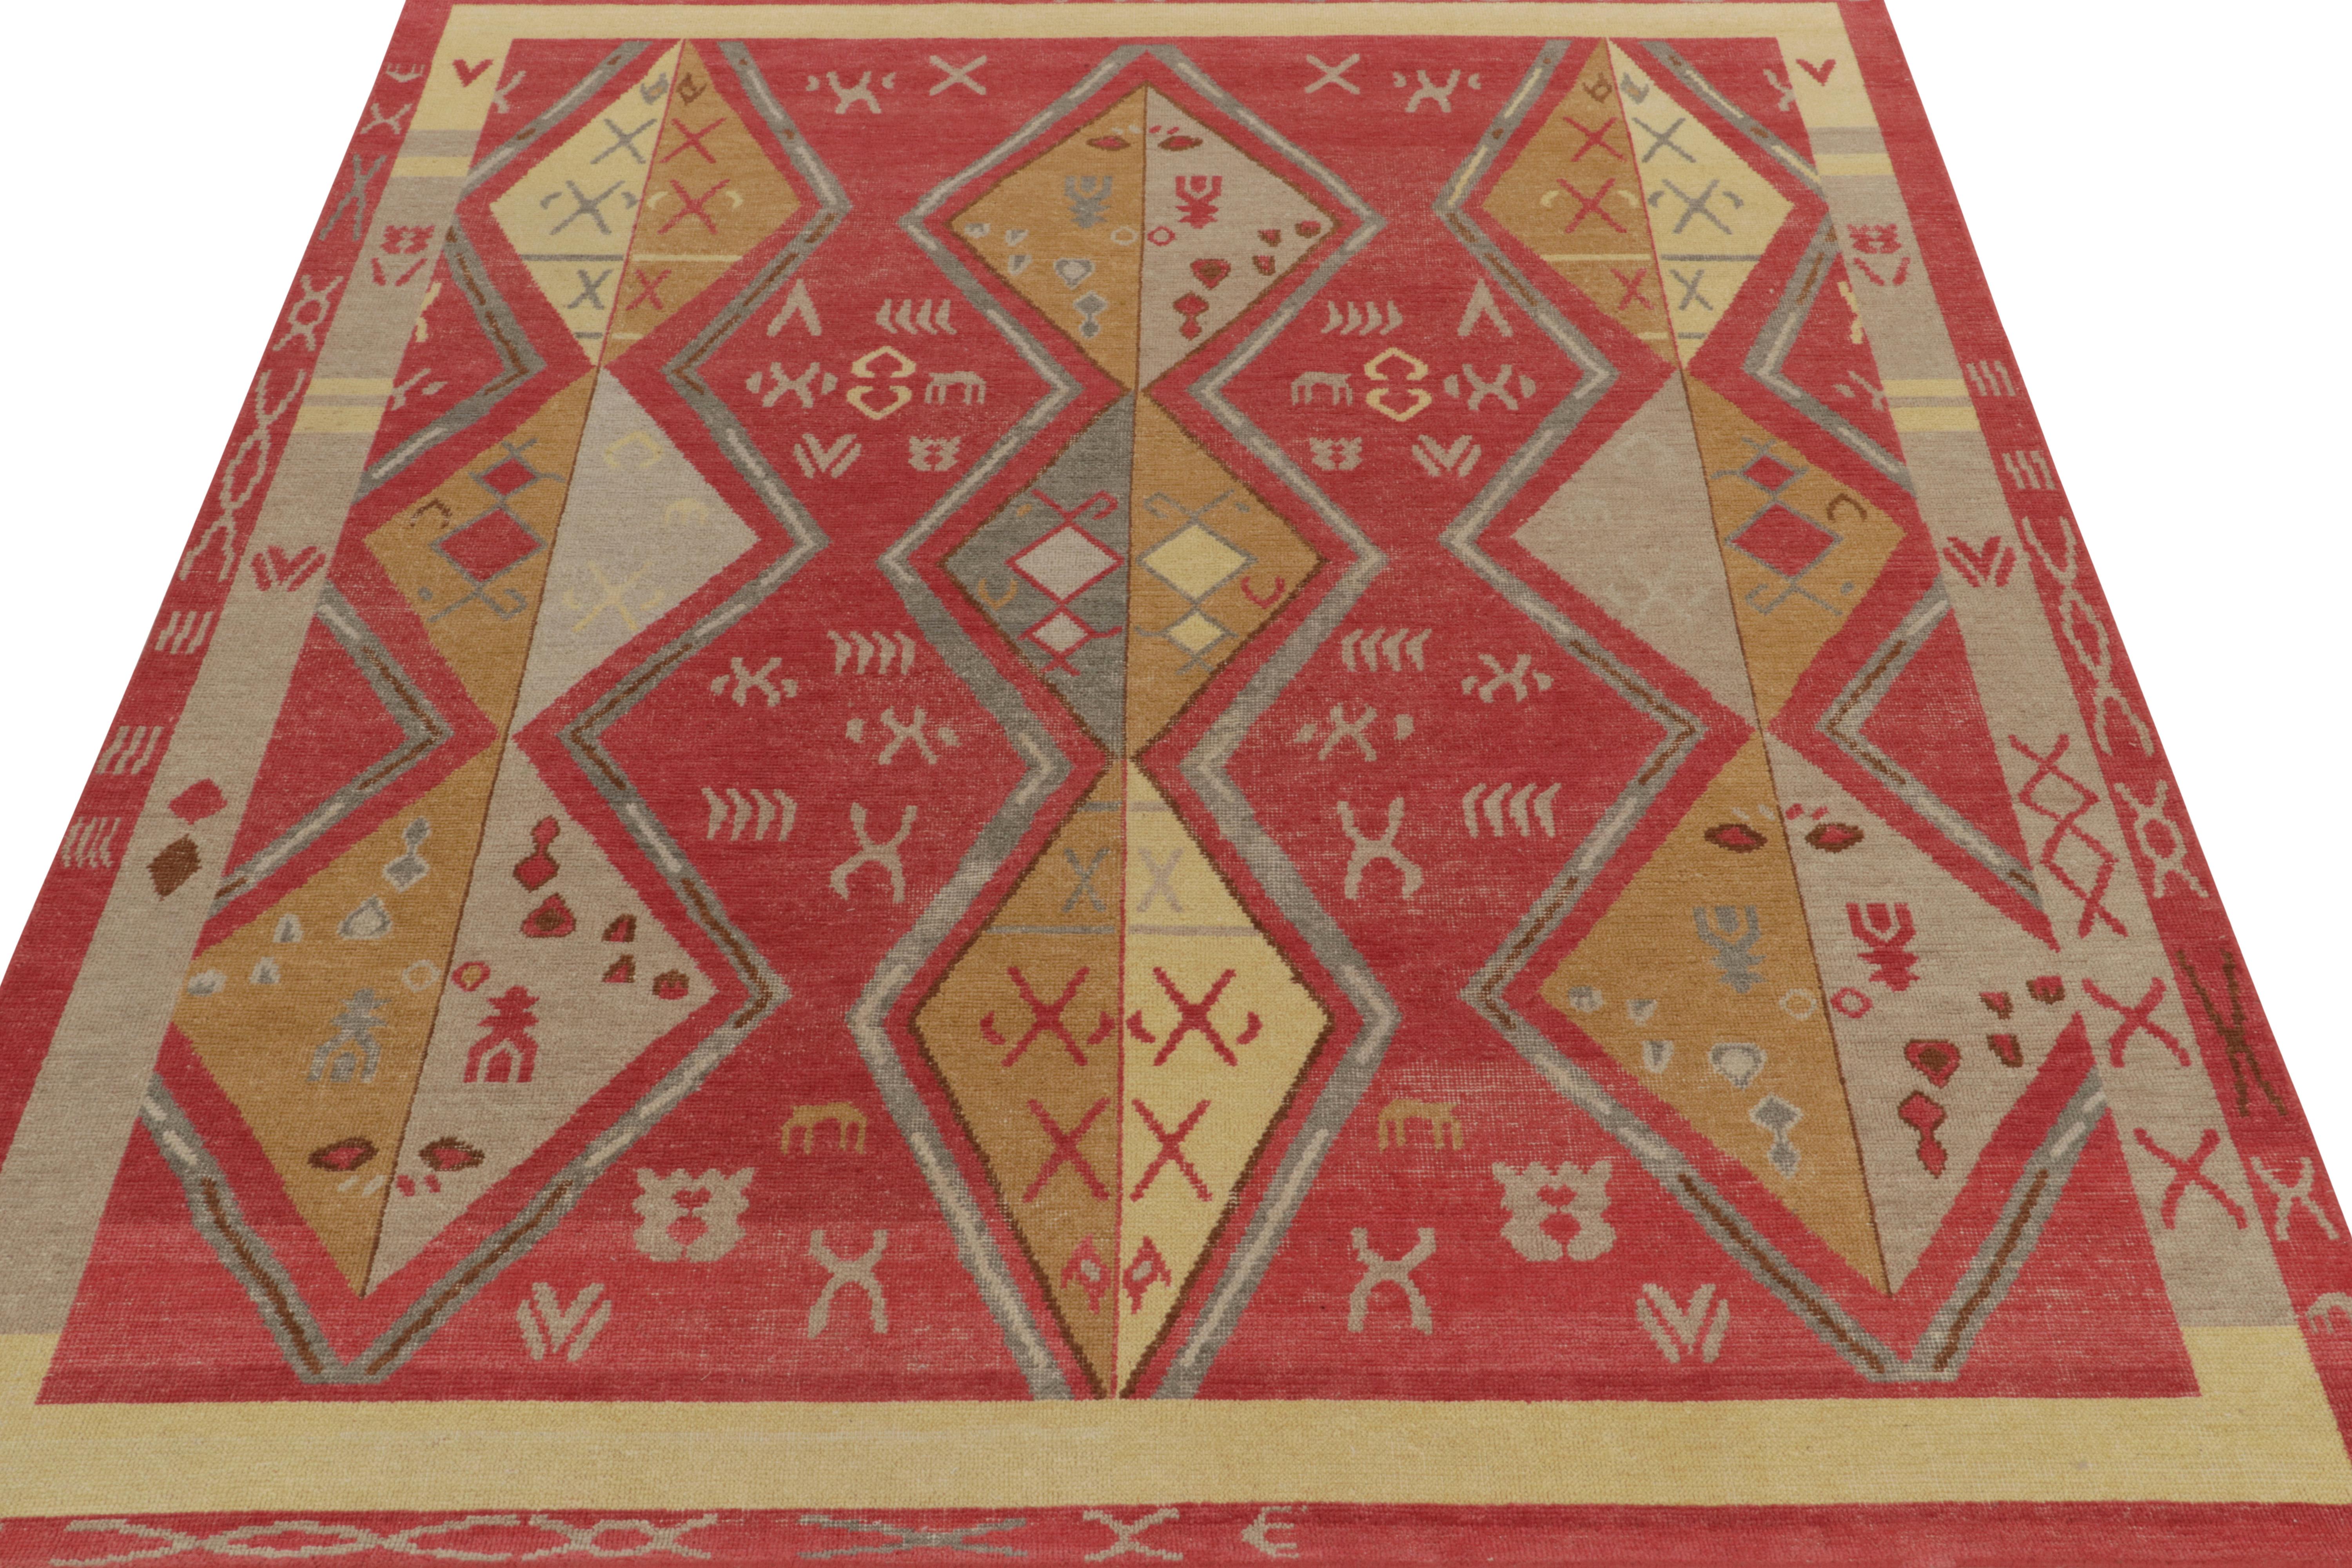 Tribal Rug & Kilim’s Distressed Yuruk Style Rug in Red, Beige & Gray Geometric Patterns For Sale